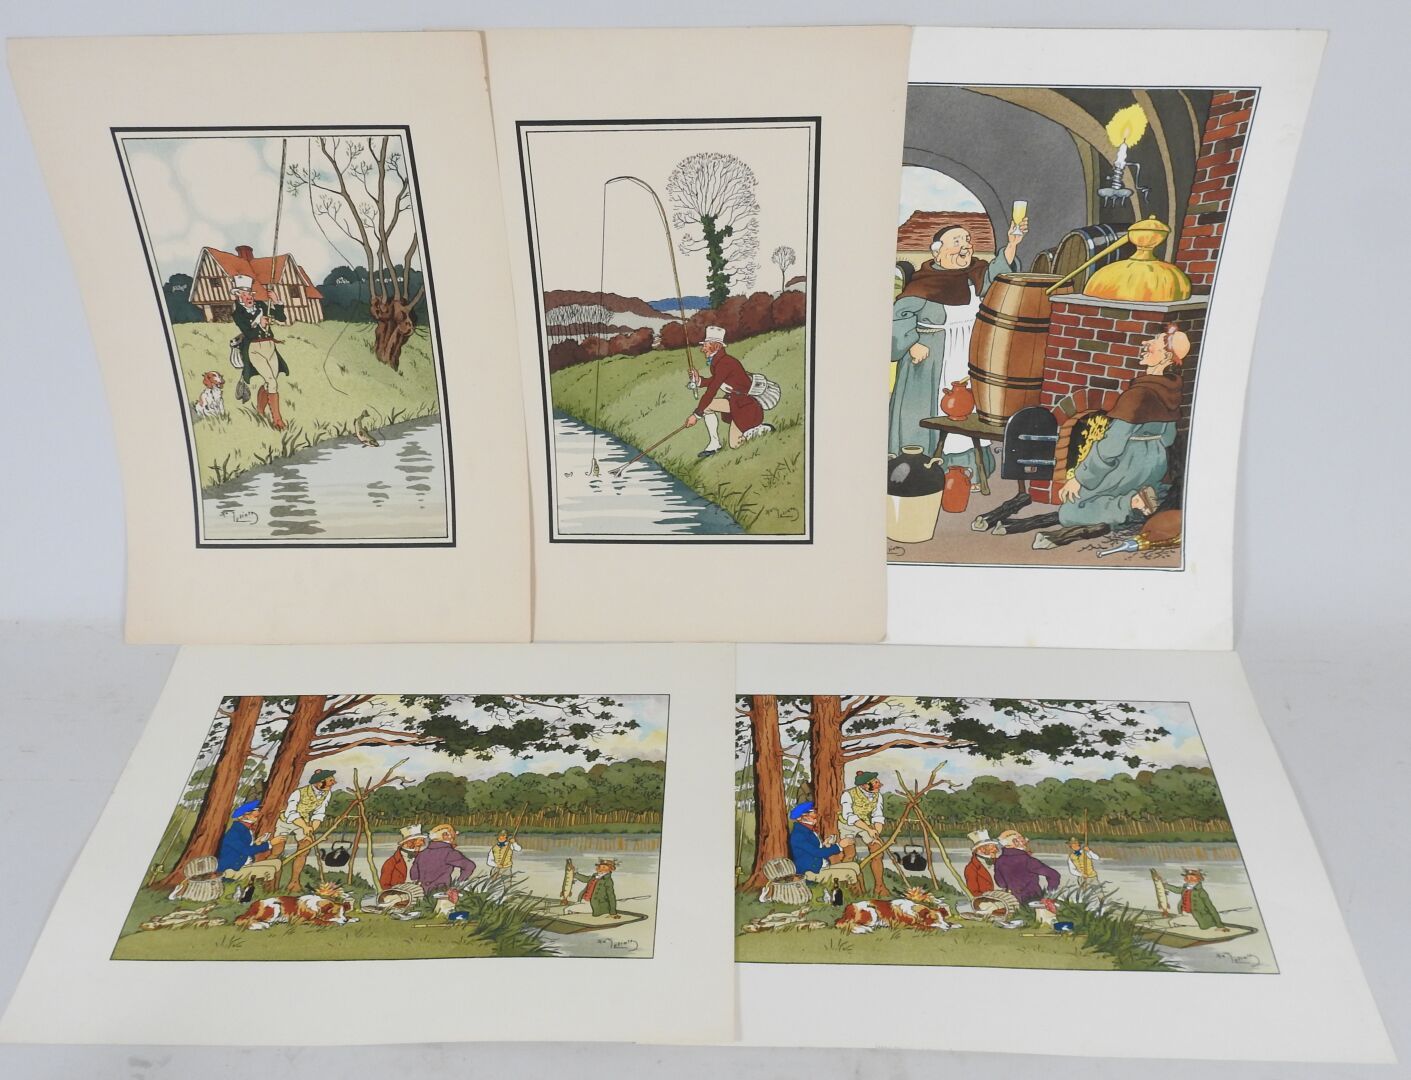 Null 哈利-艾略特（1882-1959）之后。

钓鱼的场景，僧侣和静止的场景。

五幅彩色印刷品套装。

32 x 44厘米和45 x 32.5厘米。